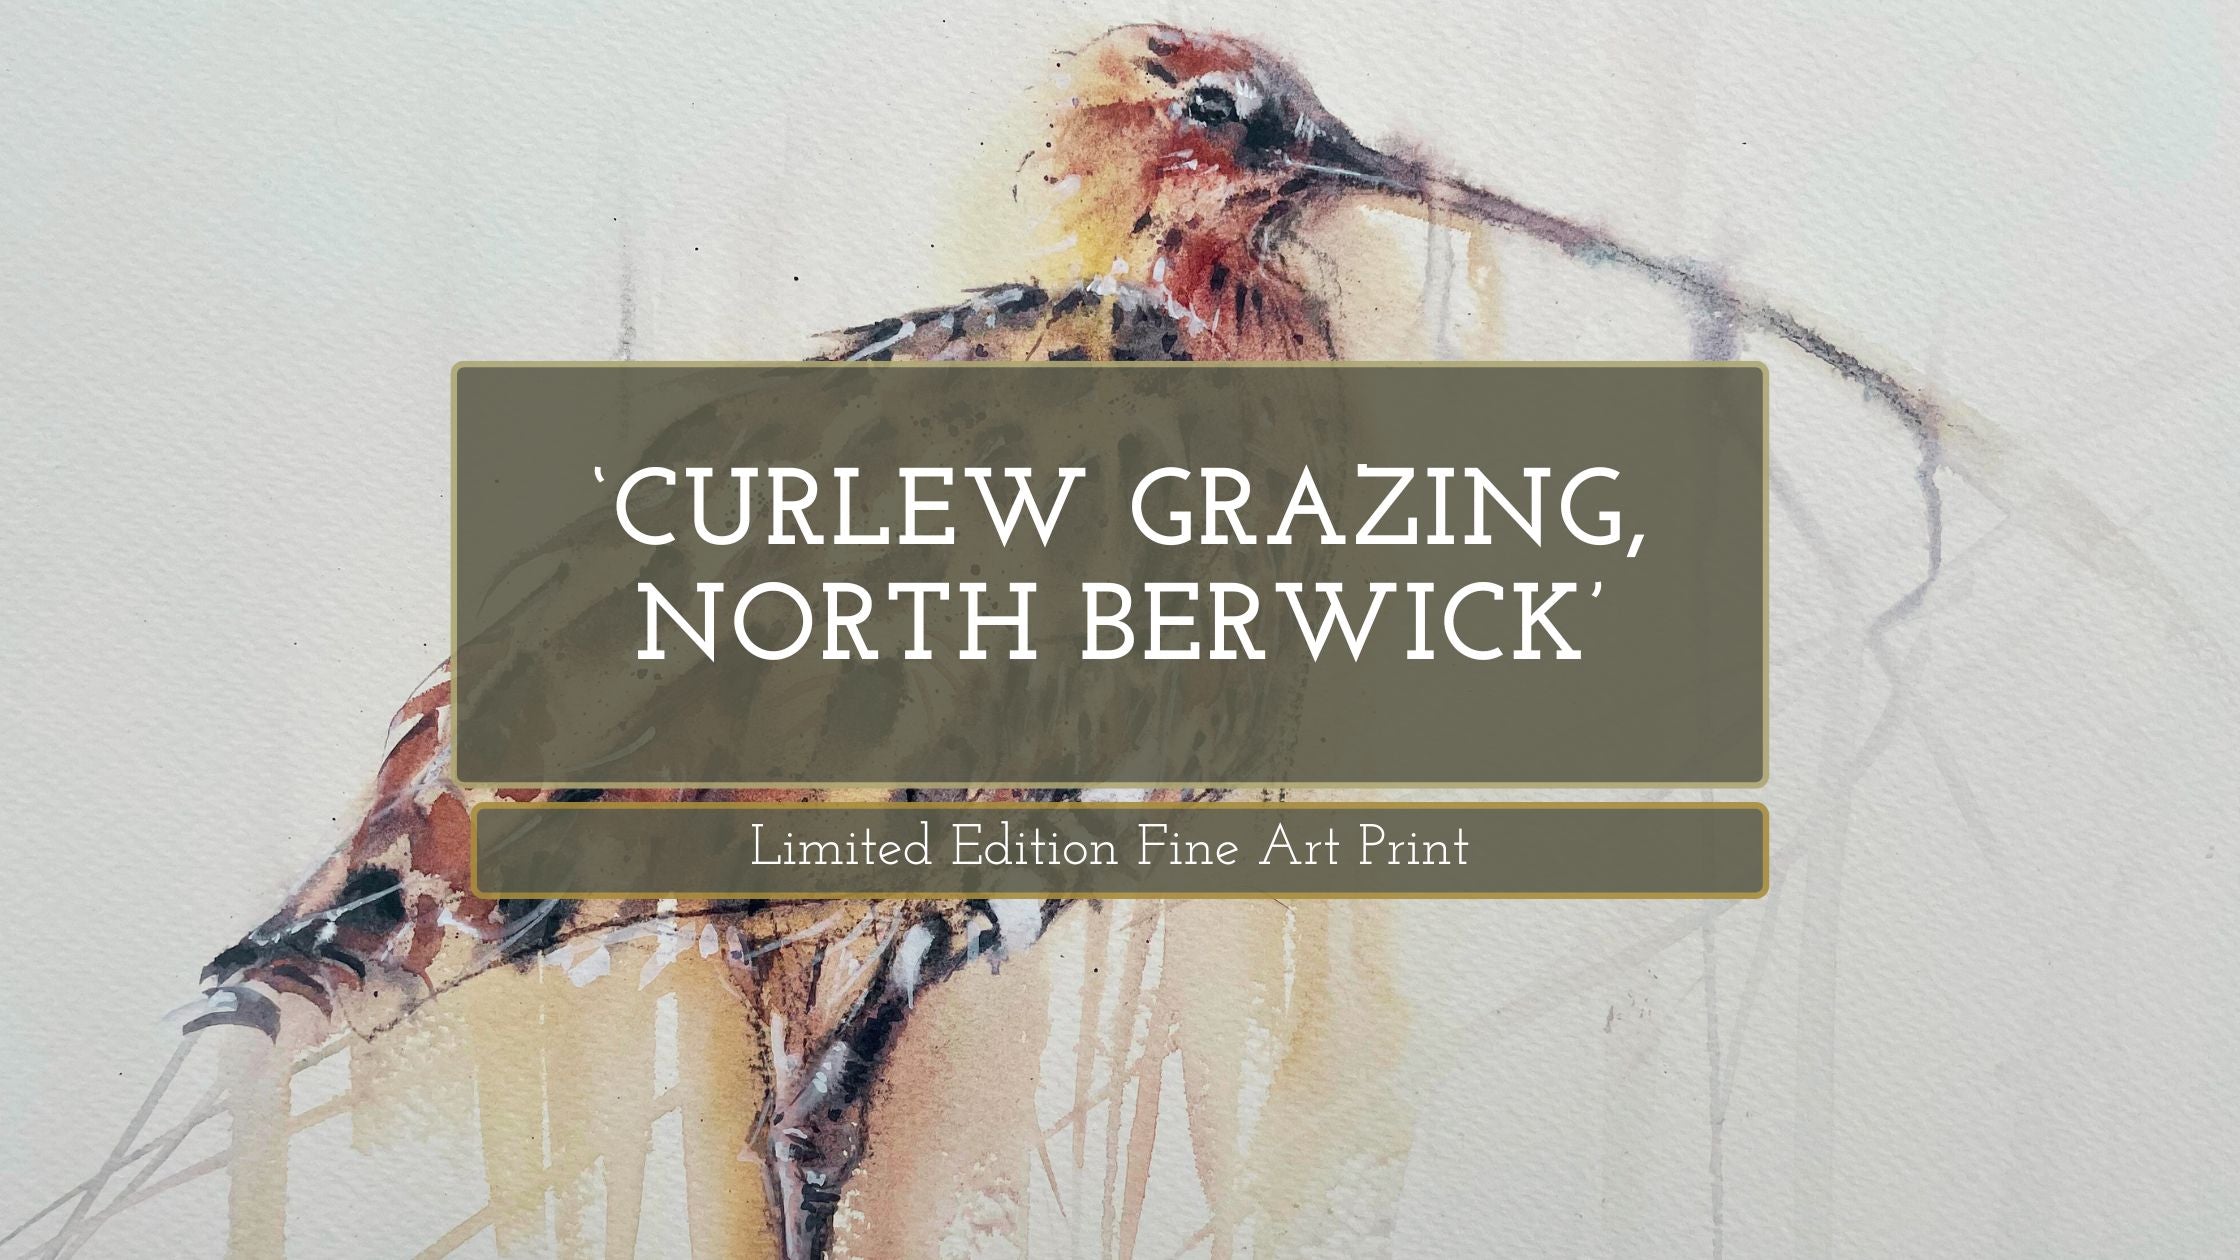 'Curlew Grazing, North Berwick' - NEW Limited Edition Fine Art Print